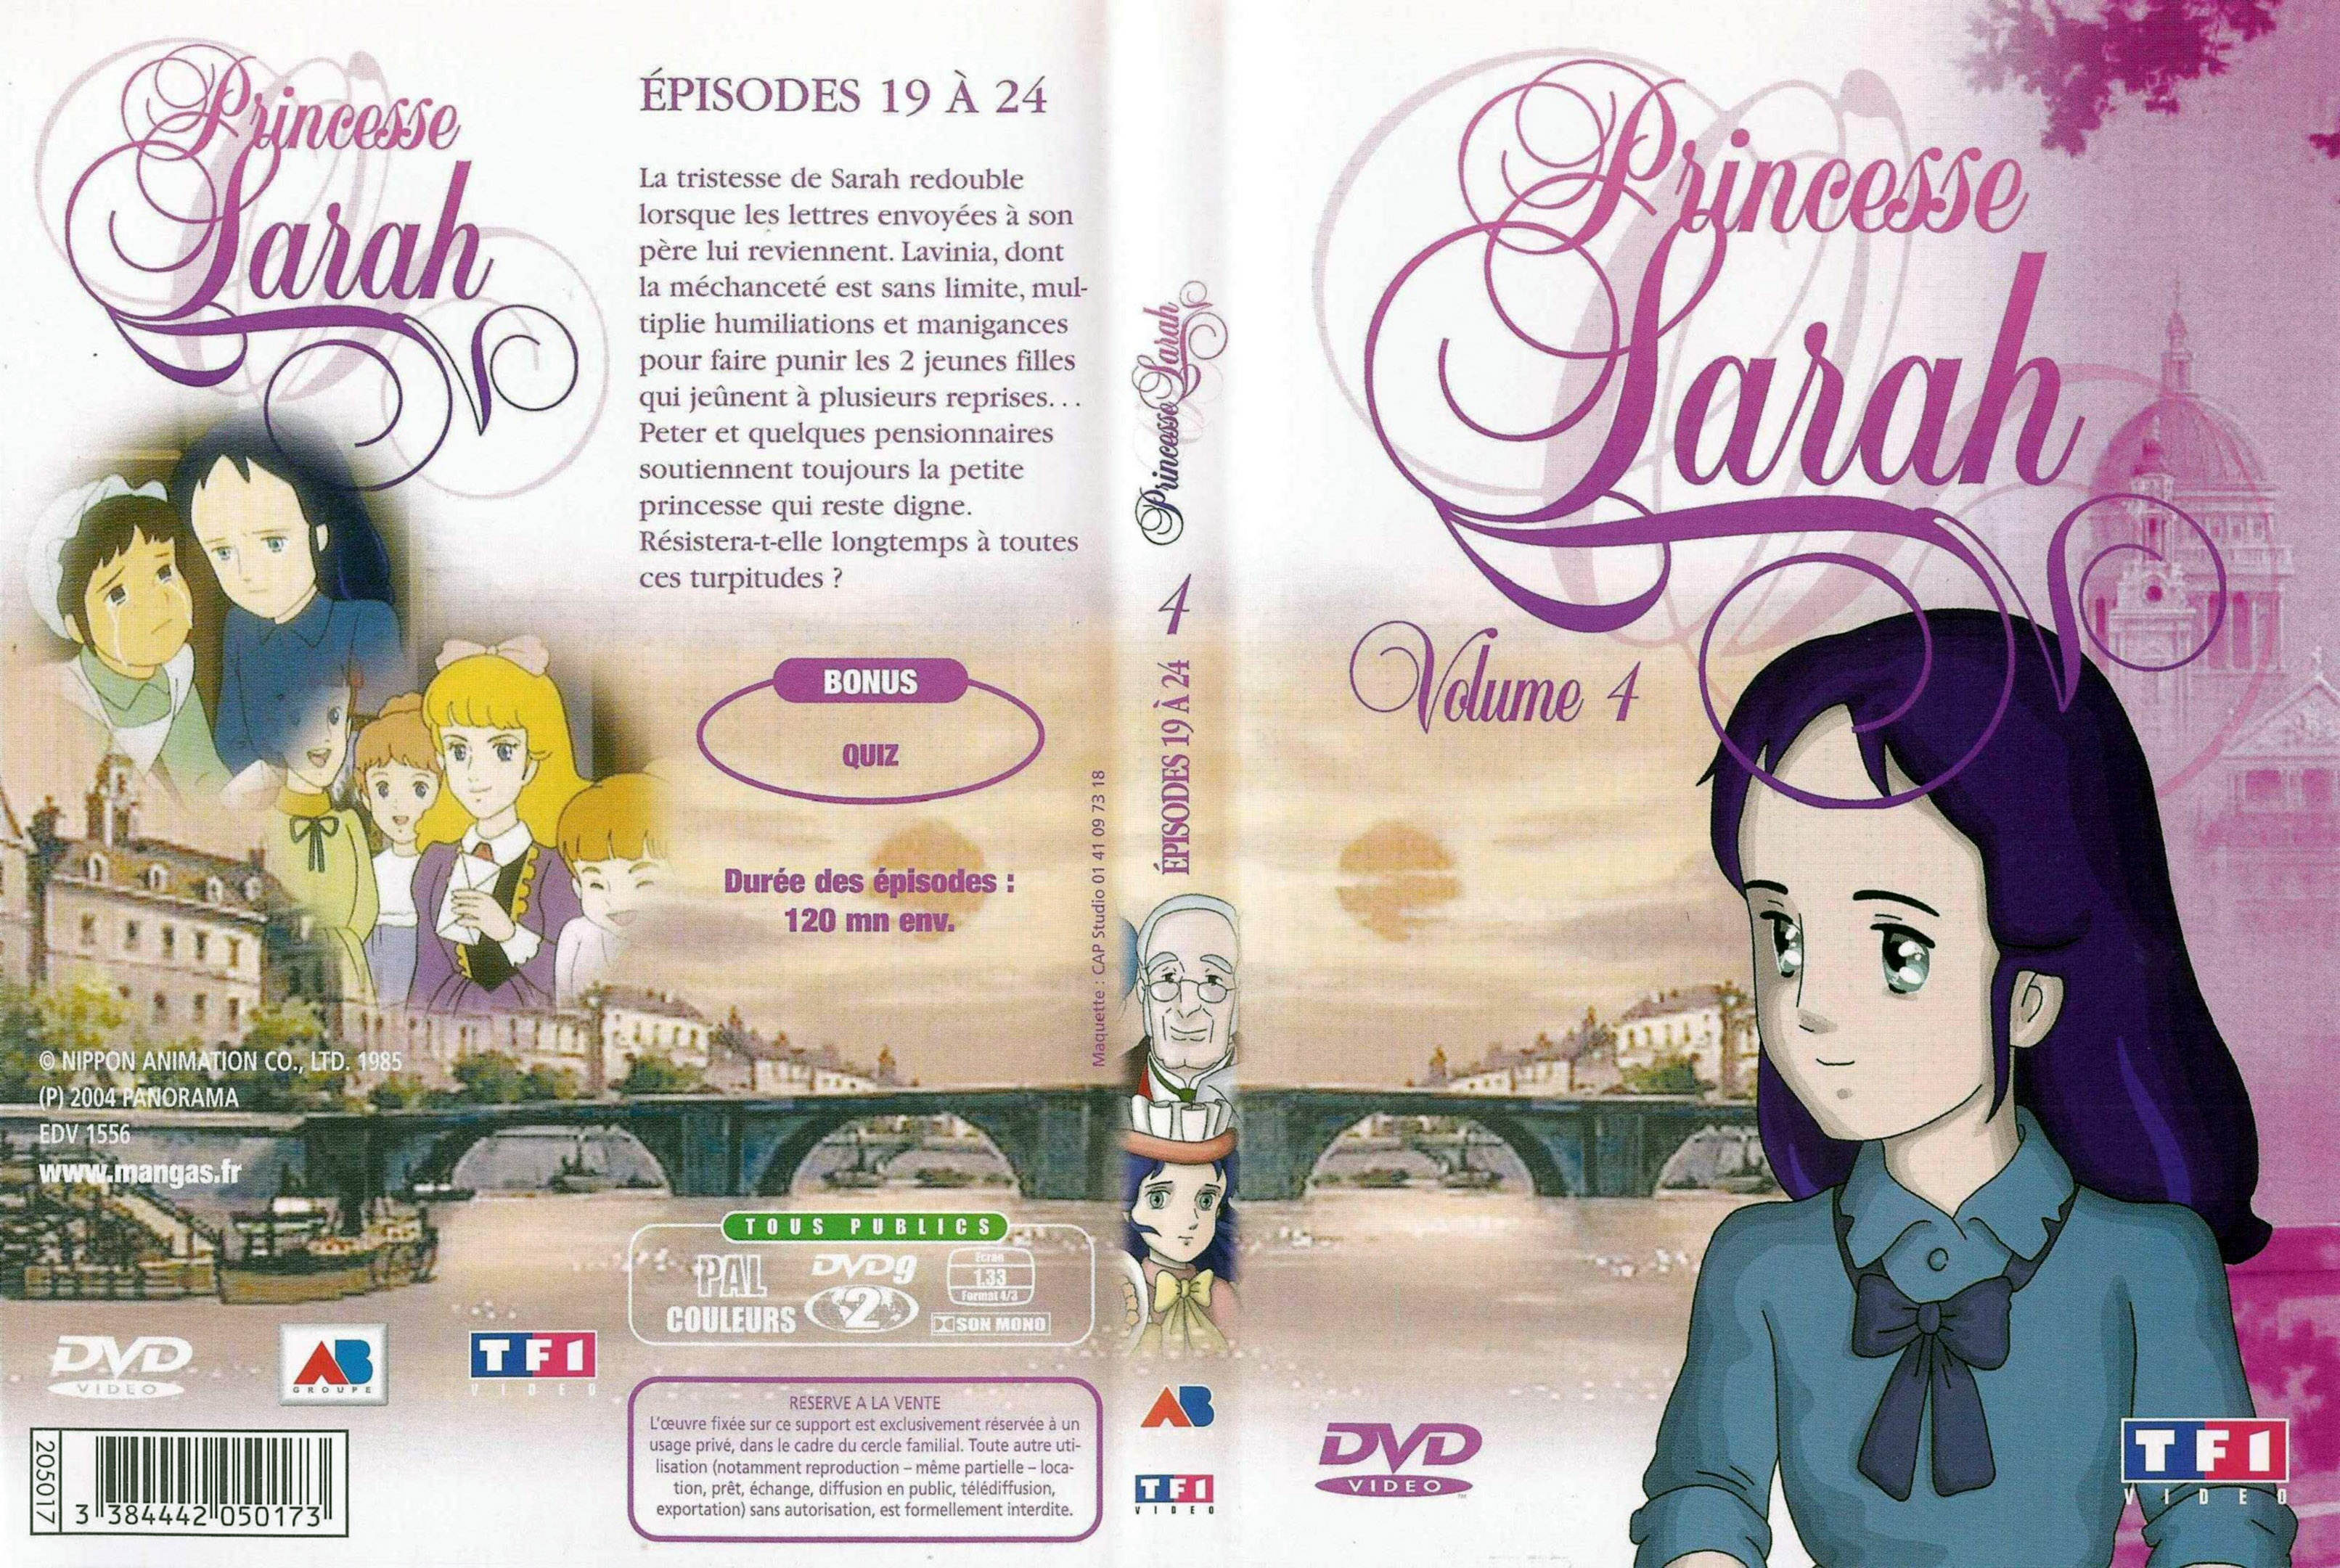 Jaquette DVD Princesse Sarah vol 4